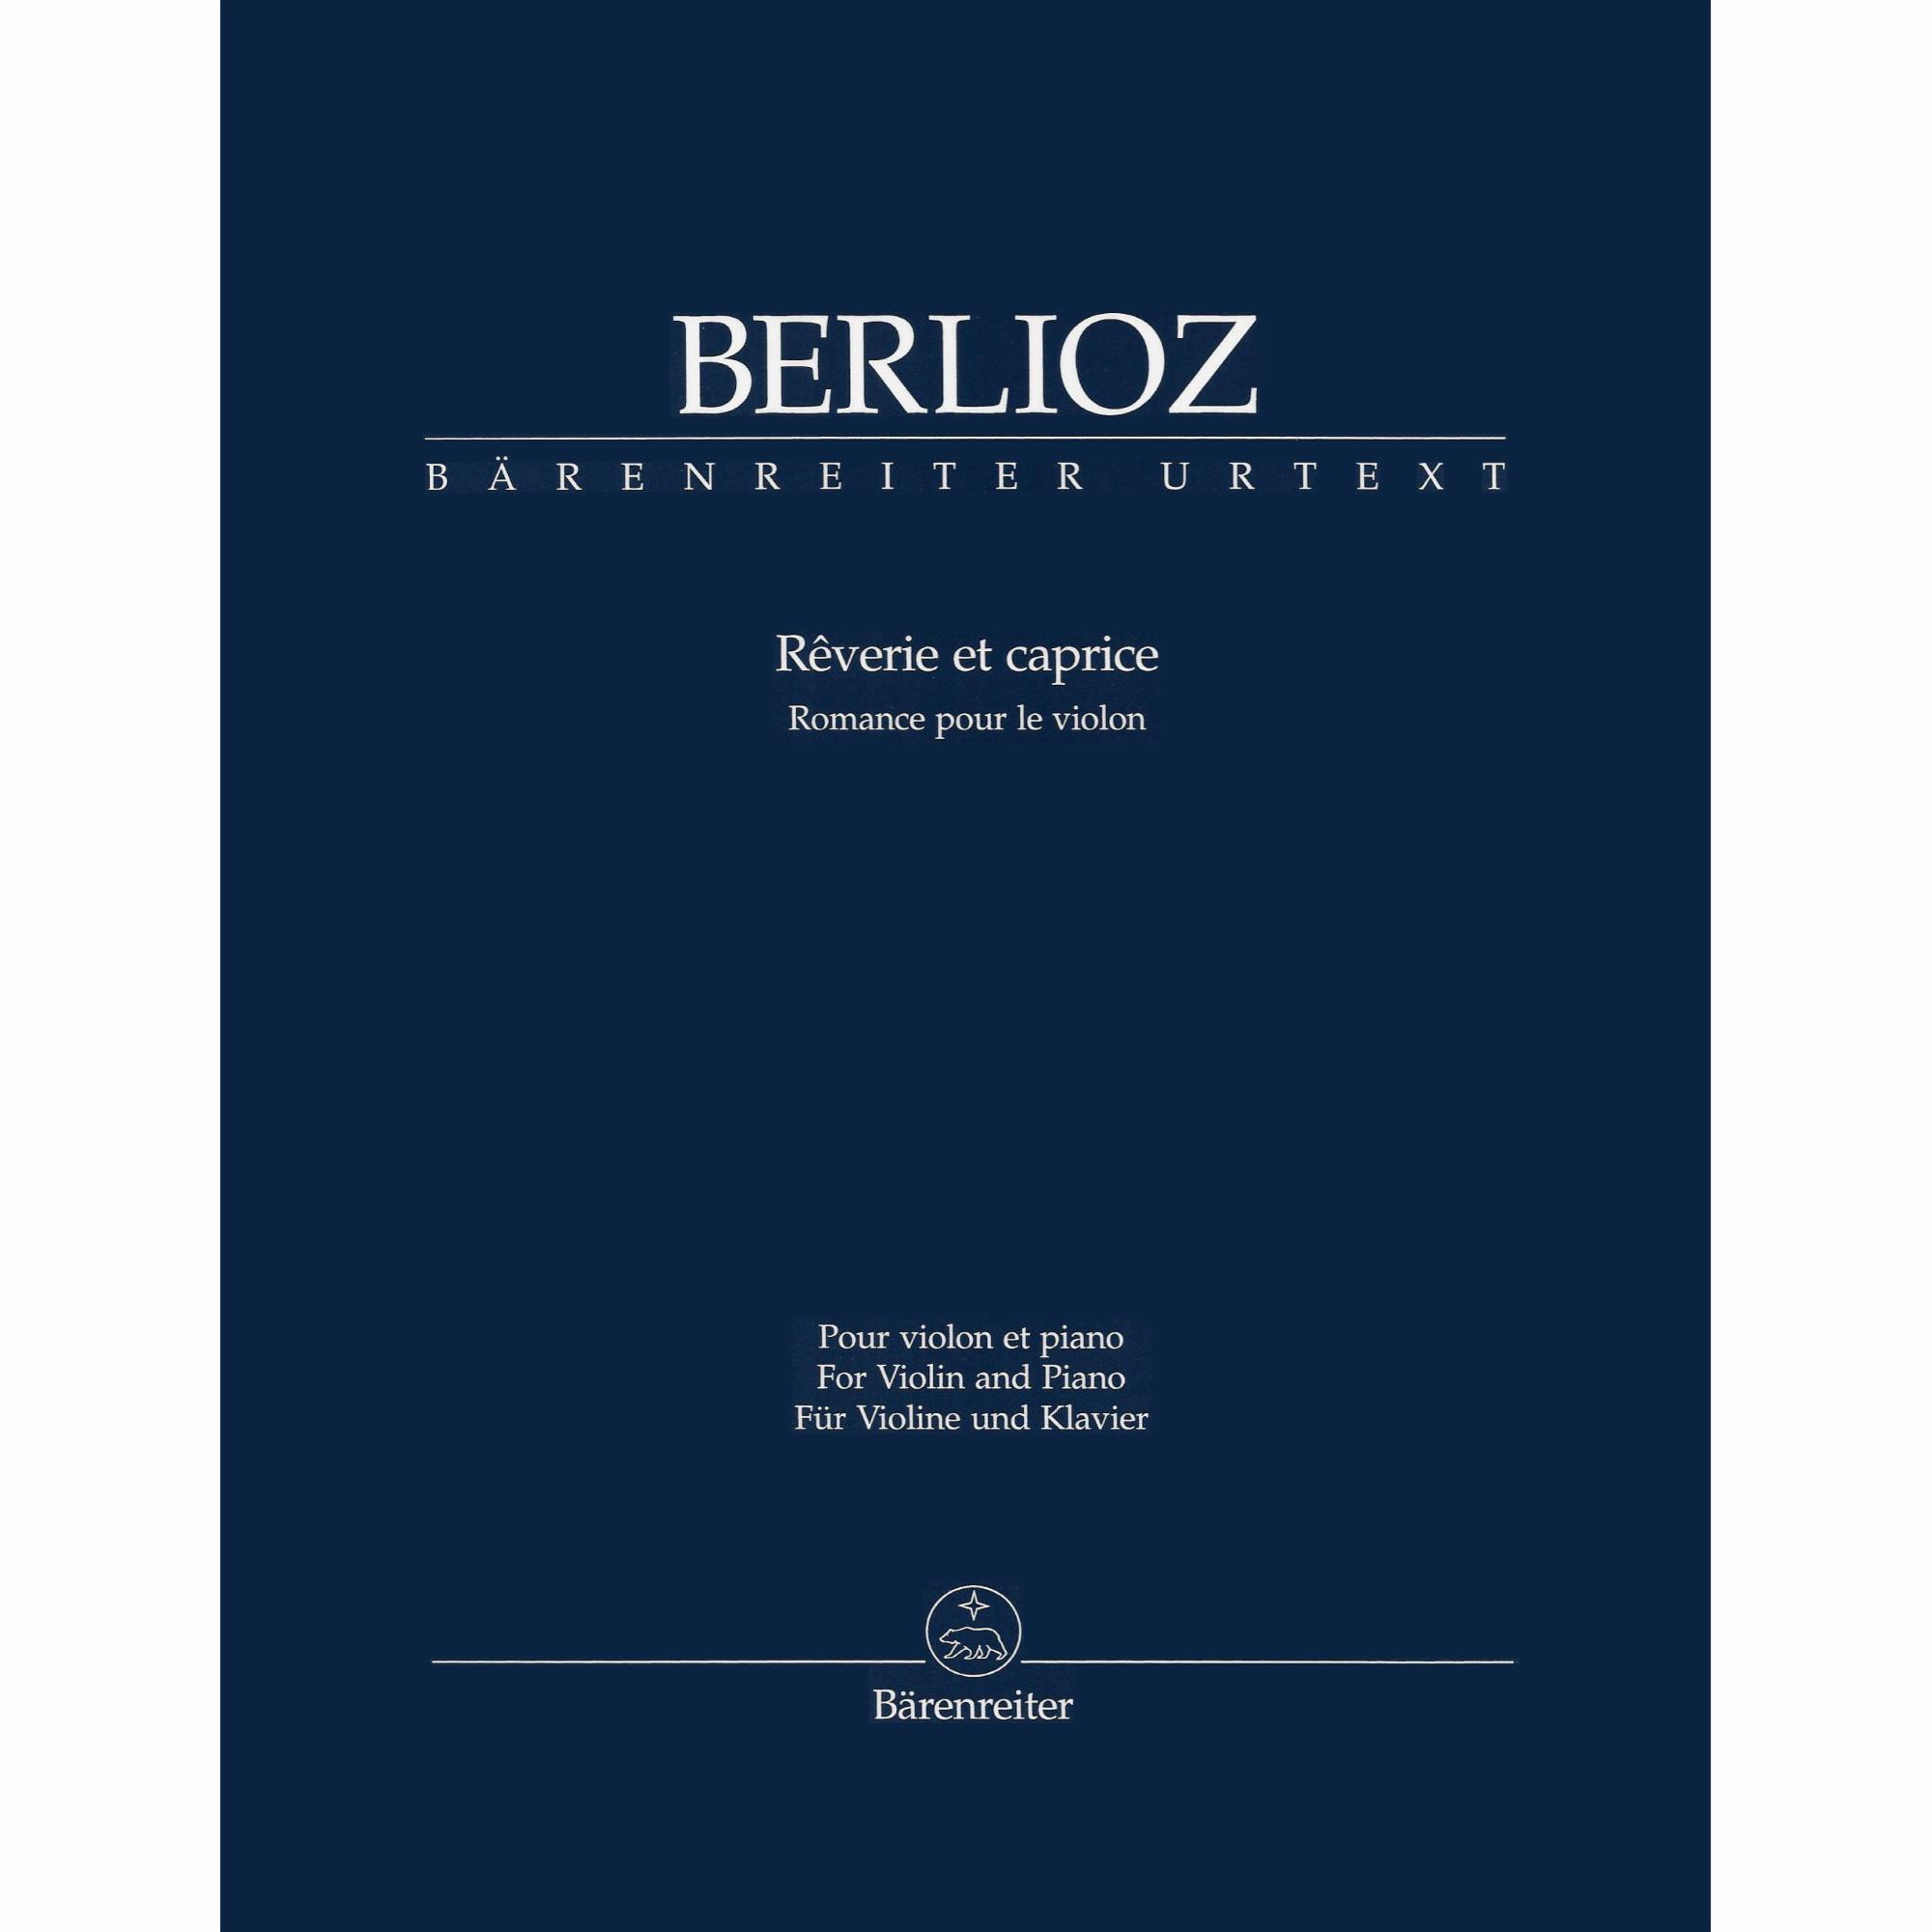 Berlioz -- Reverie et caprice: Romance for Violin and Piano